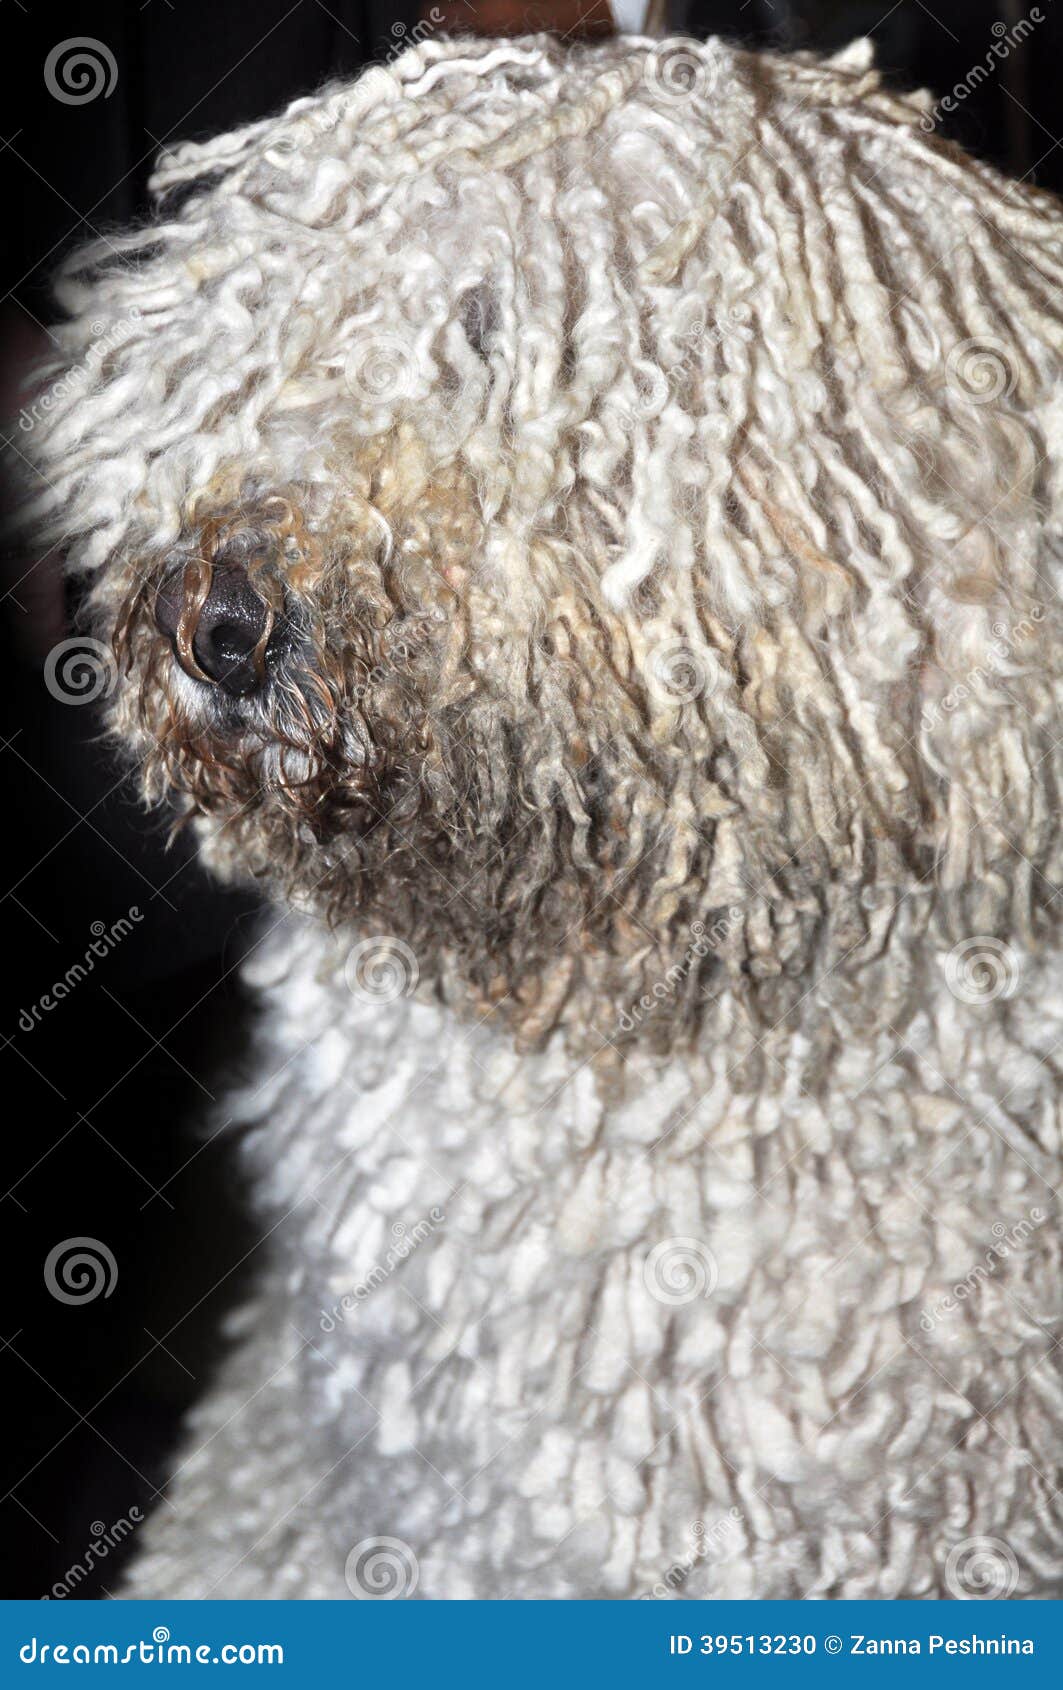 Komondor Dog Stock Photo - Image: 39513230